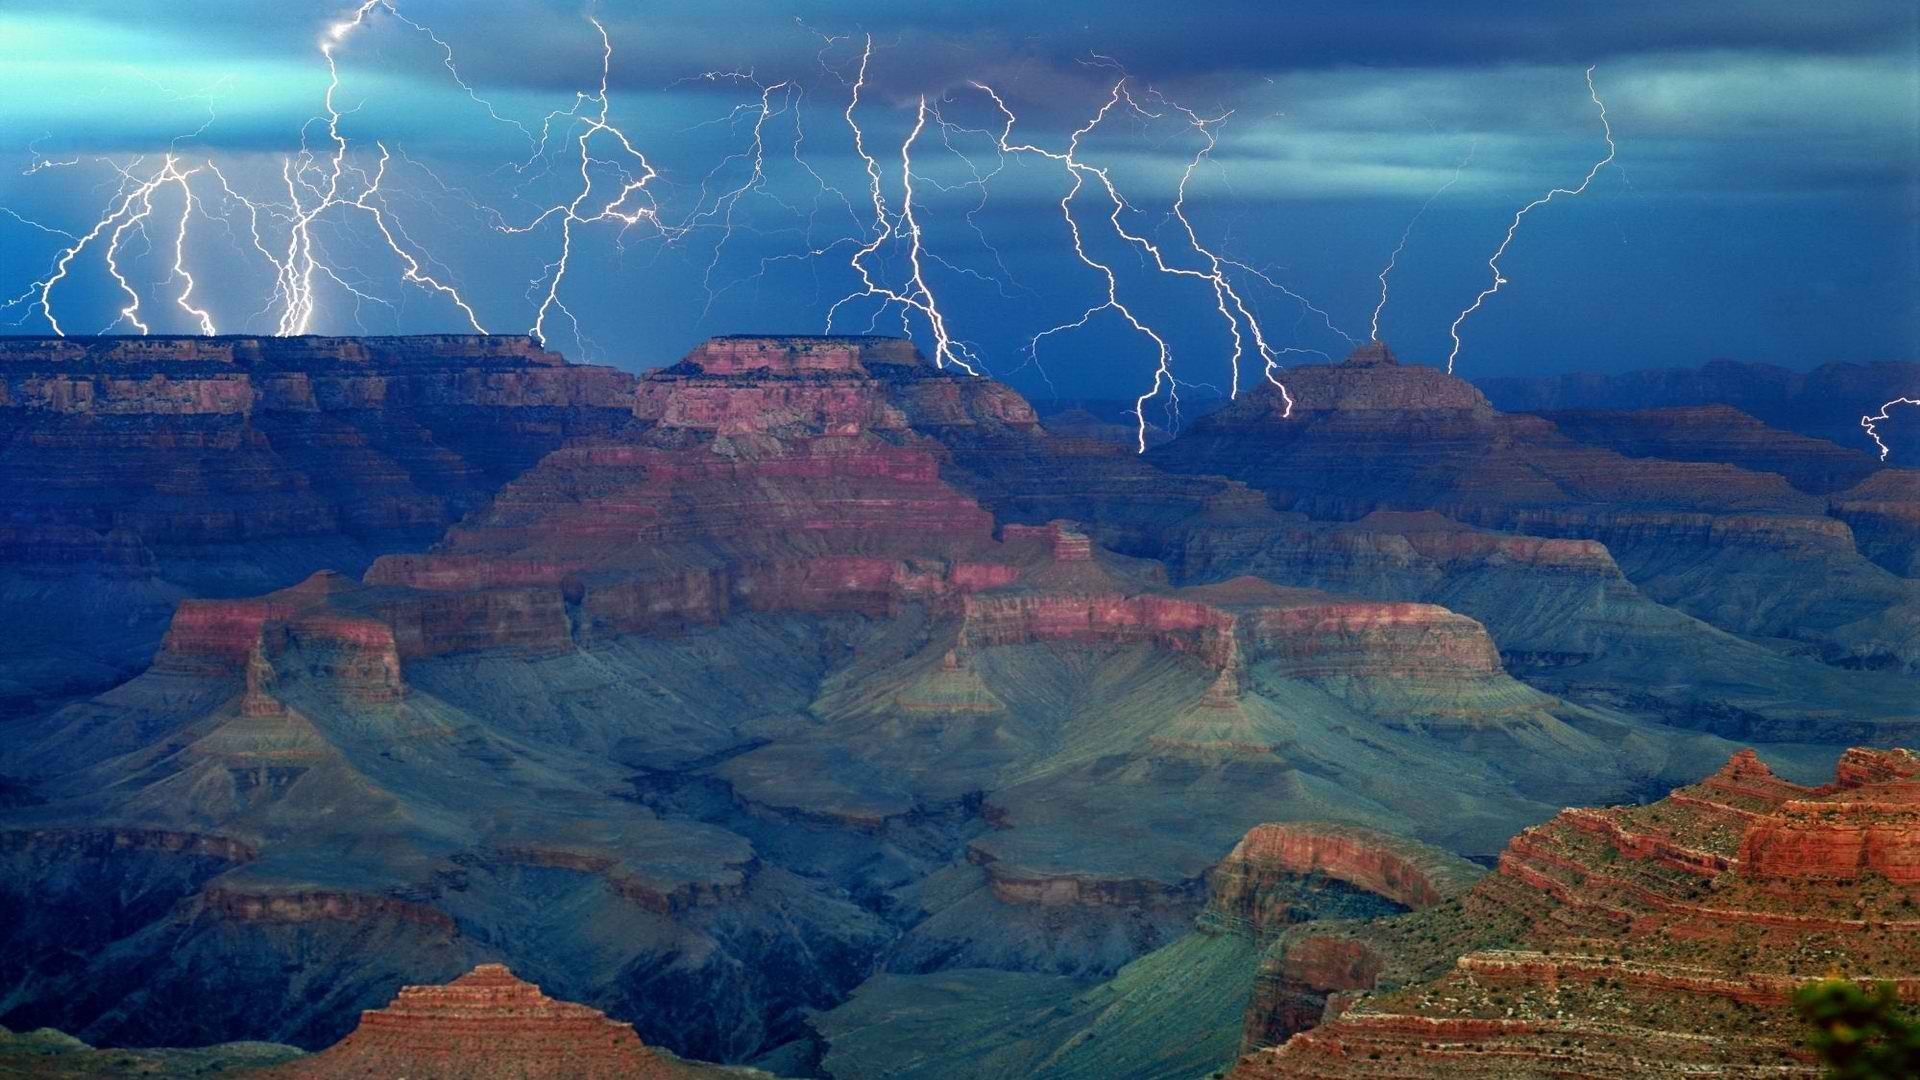 Grand Canyon National Park 555123. SHARE. TAGS Gallery Cool World Desktop Backgrounds Landscape Background Alien Planet